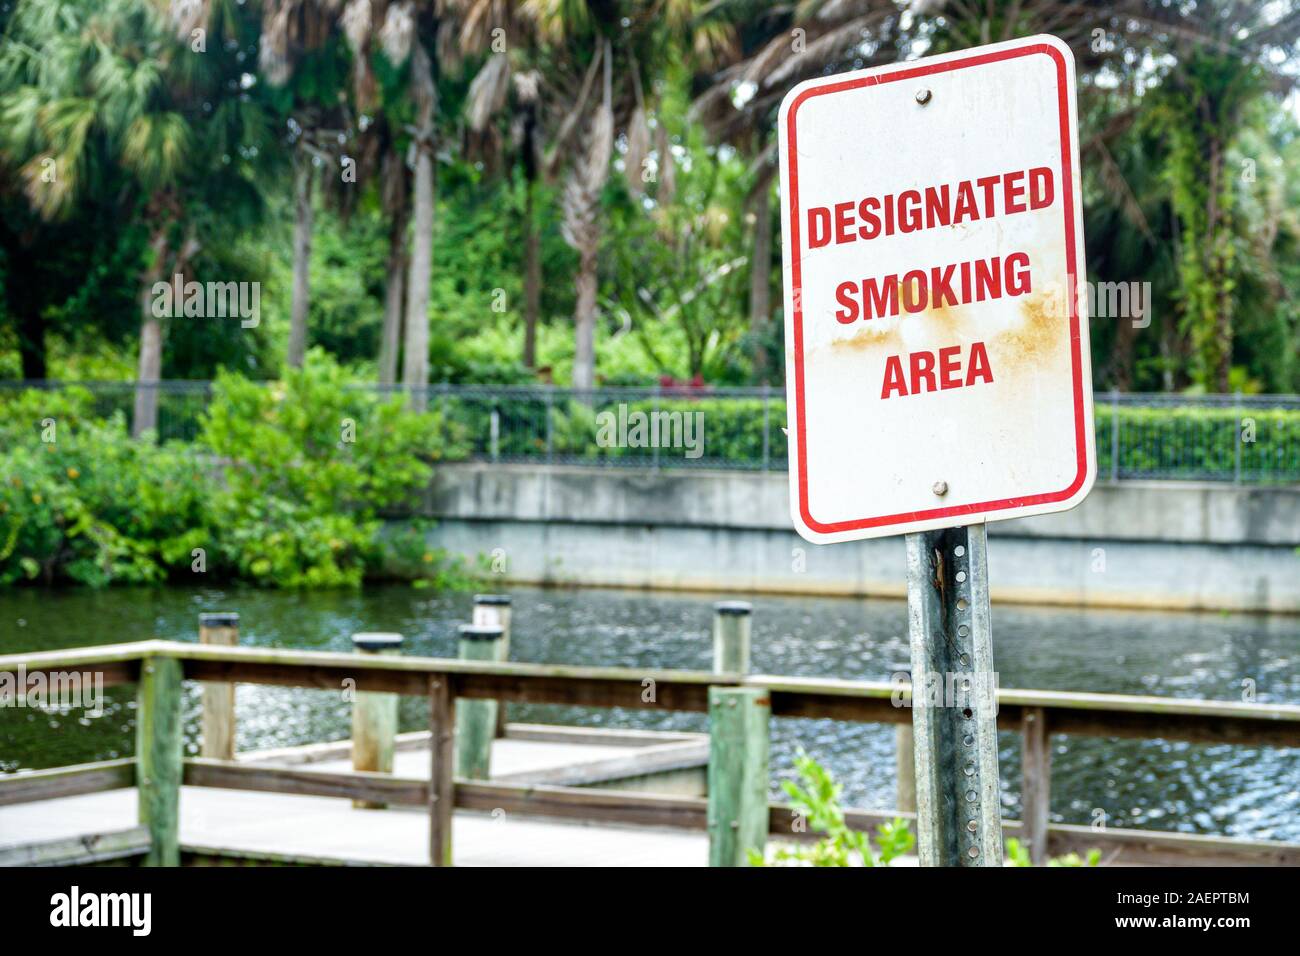 Port St. Saint Lucie Florida, North Fork St. Saint Lucie River Aquatic Preserve, Veterans Memorial Park, area fumatori all'aperto, cartello, FL190920011 Foto Stock